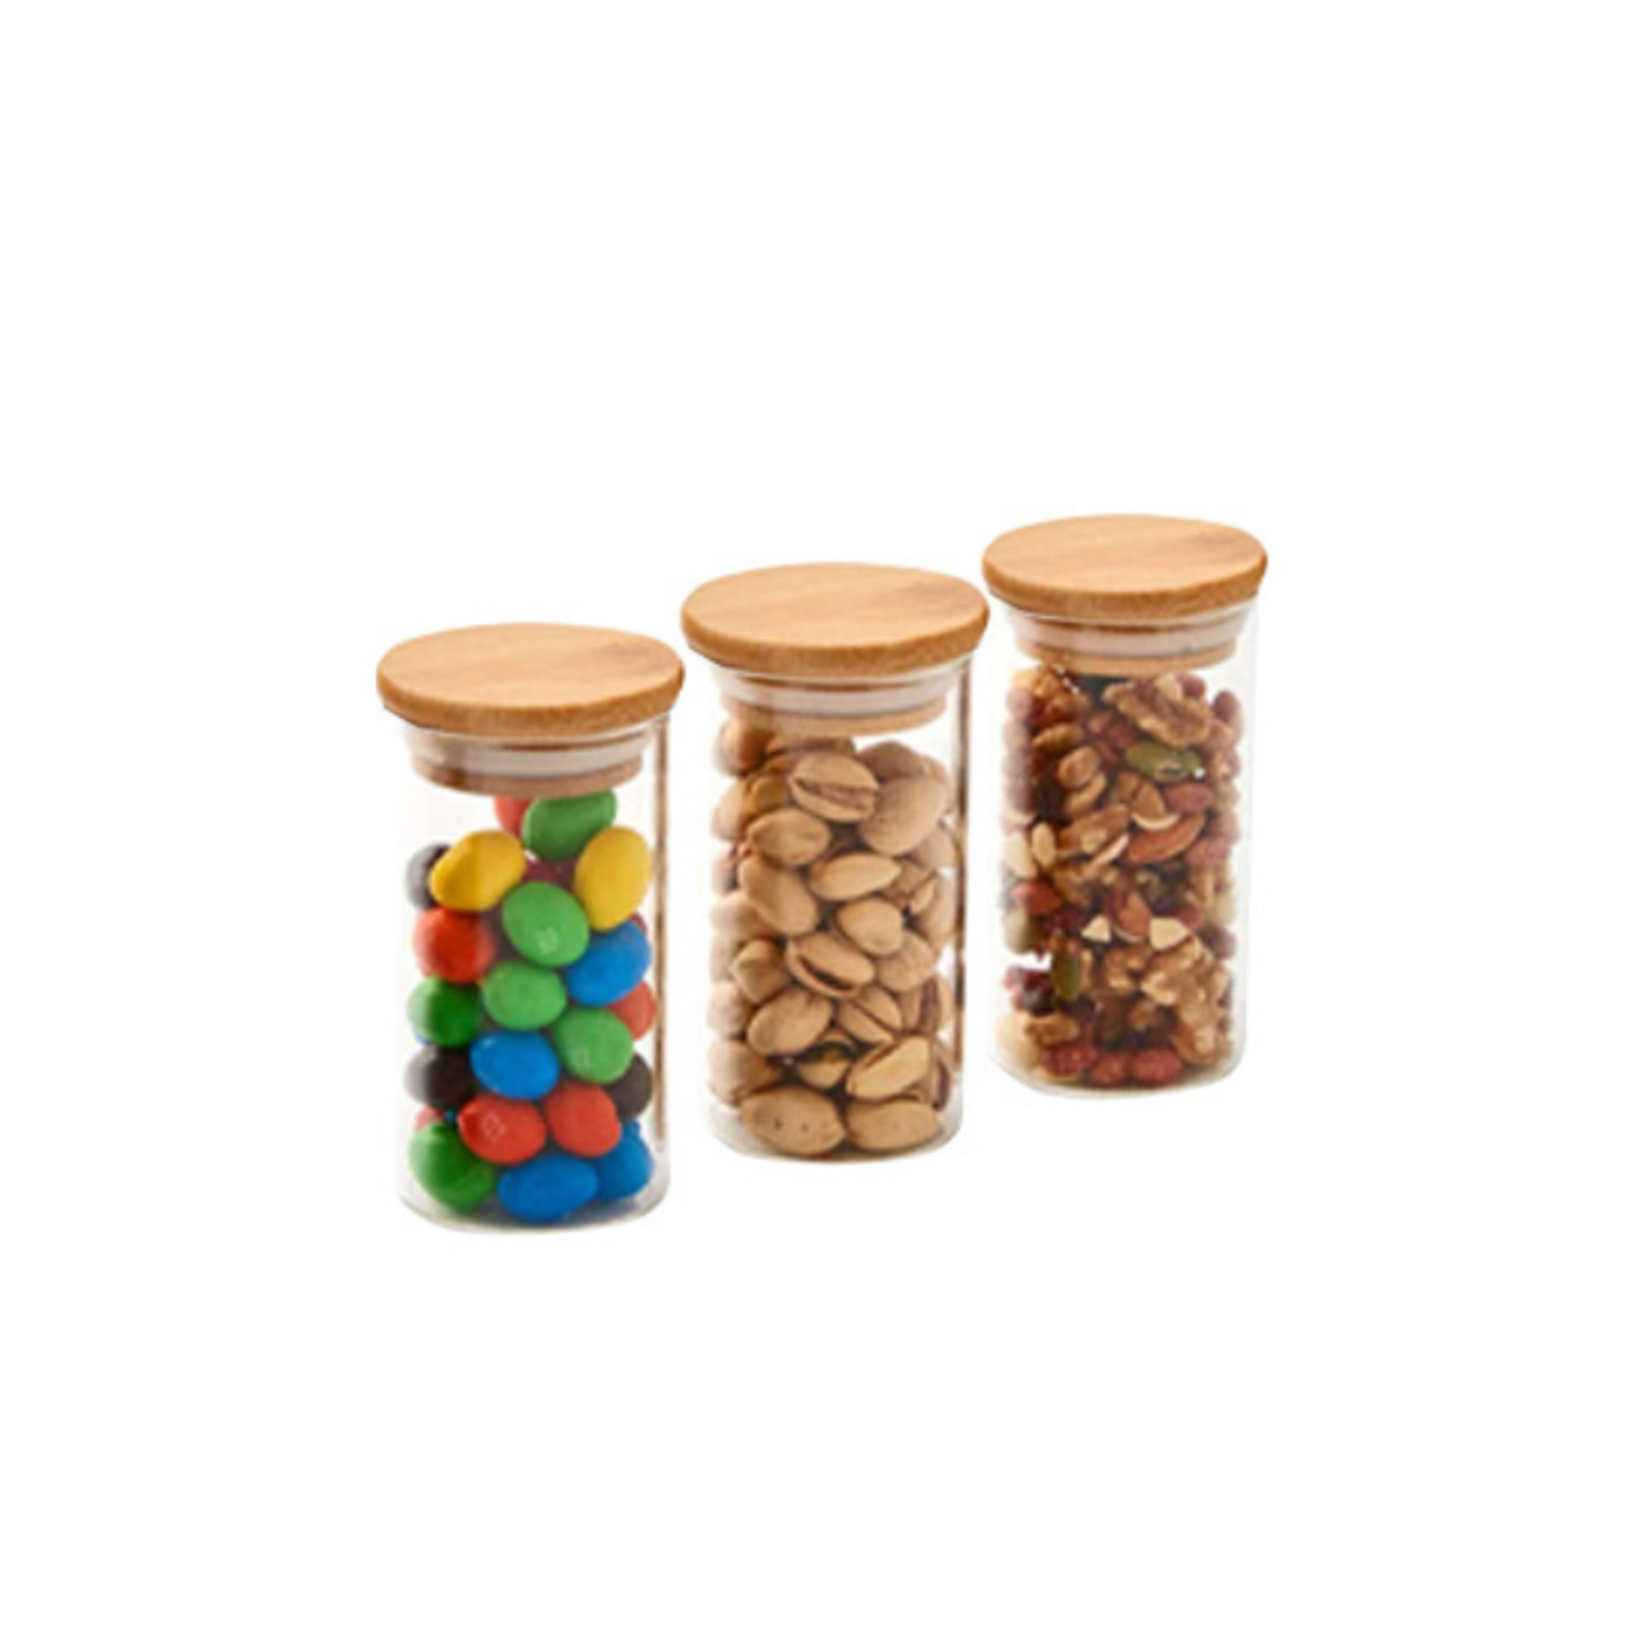 Willdan Glass Spice Jars Set - 3 Pack